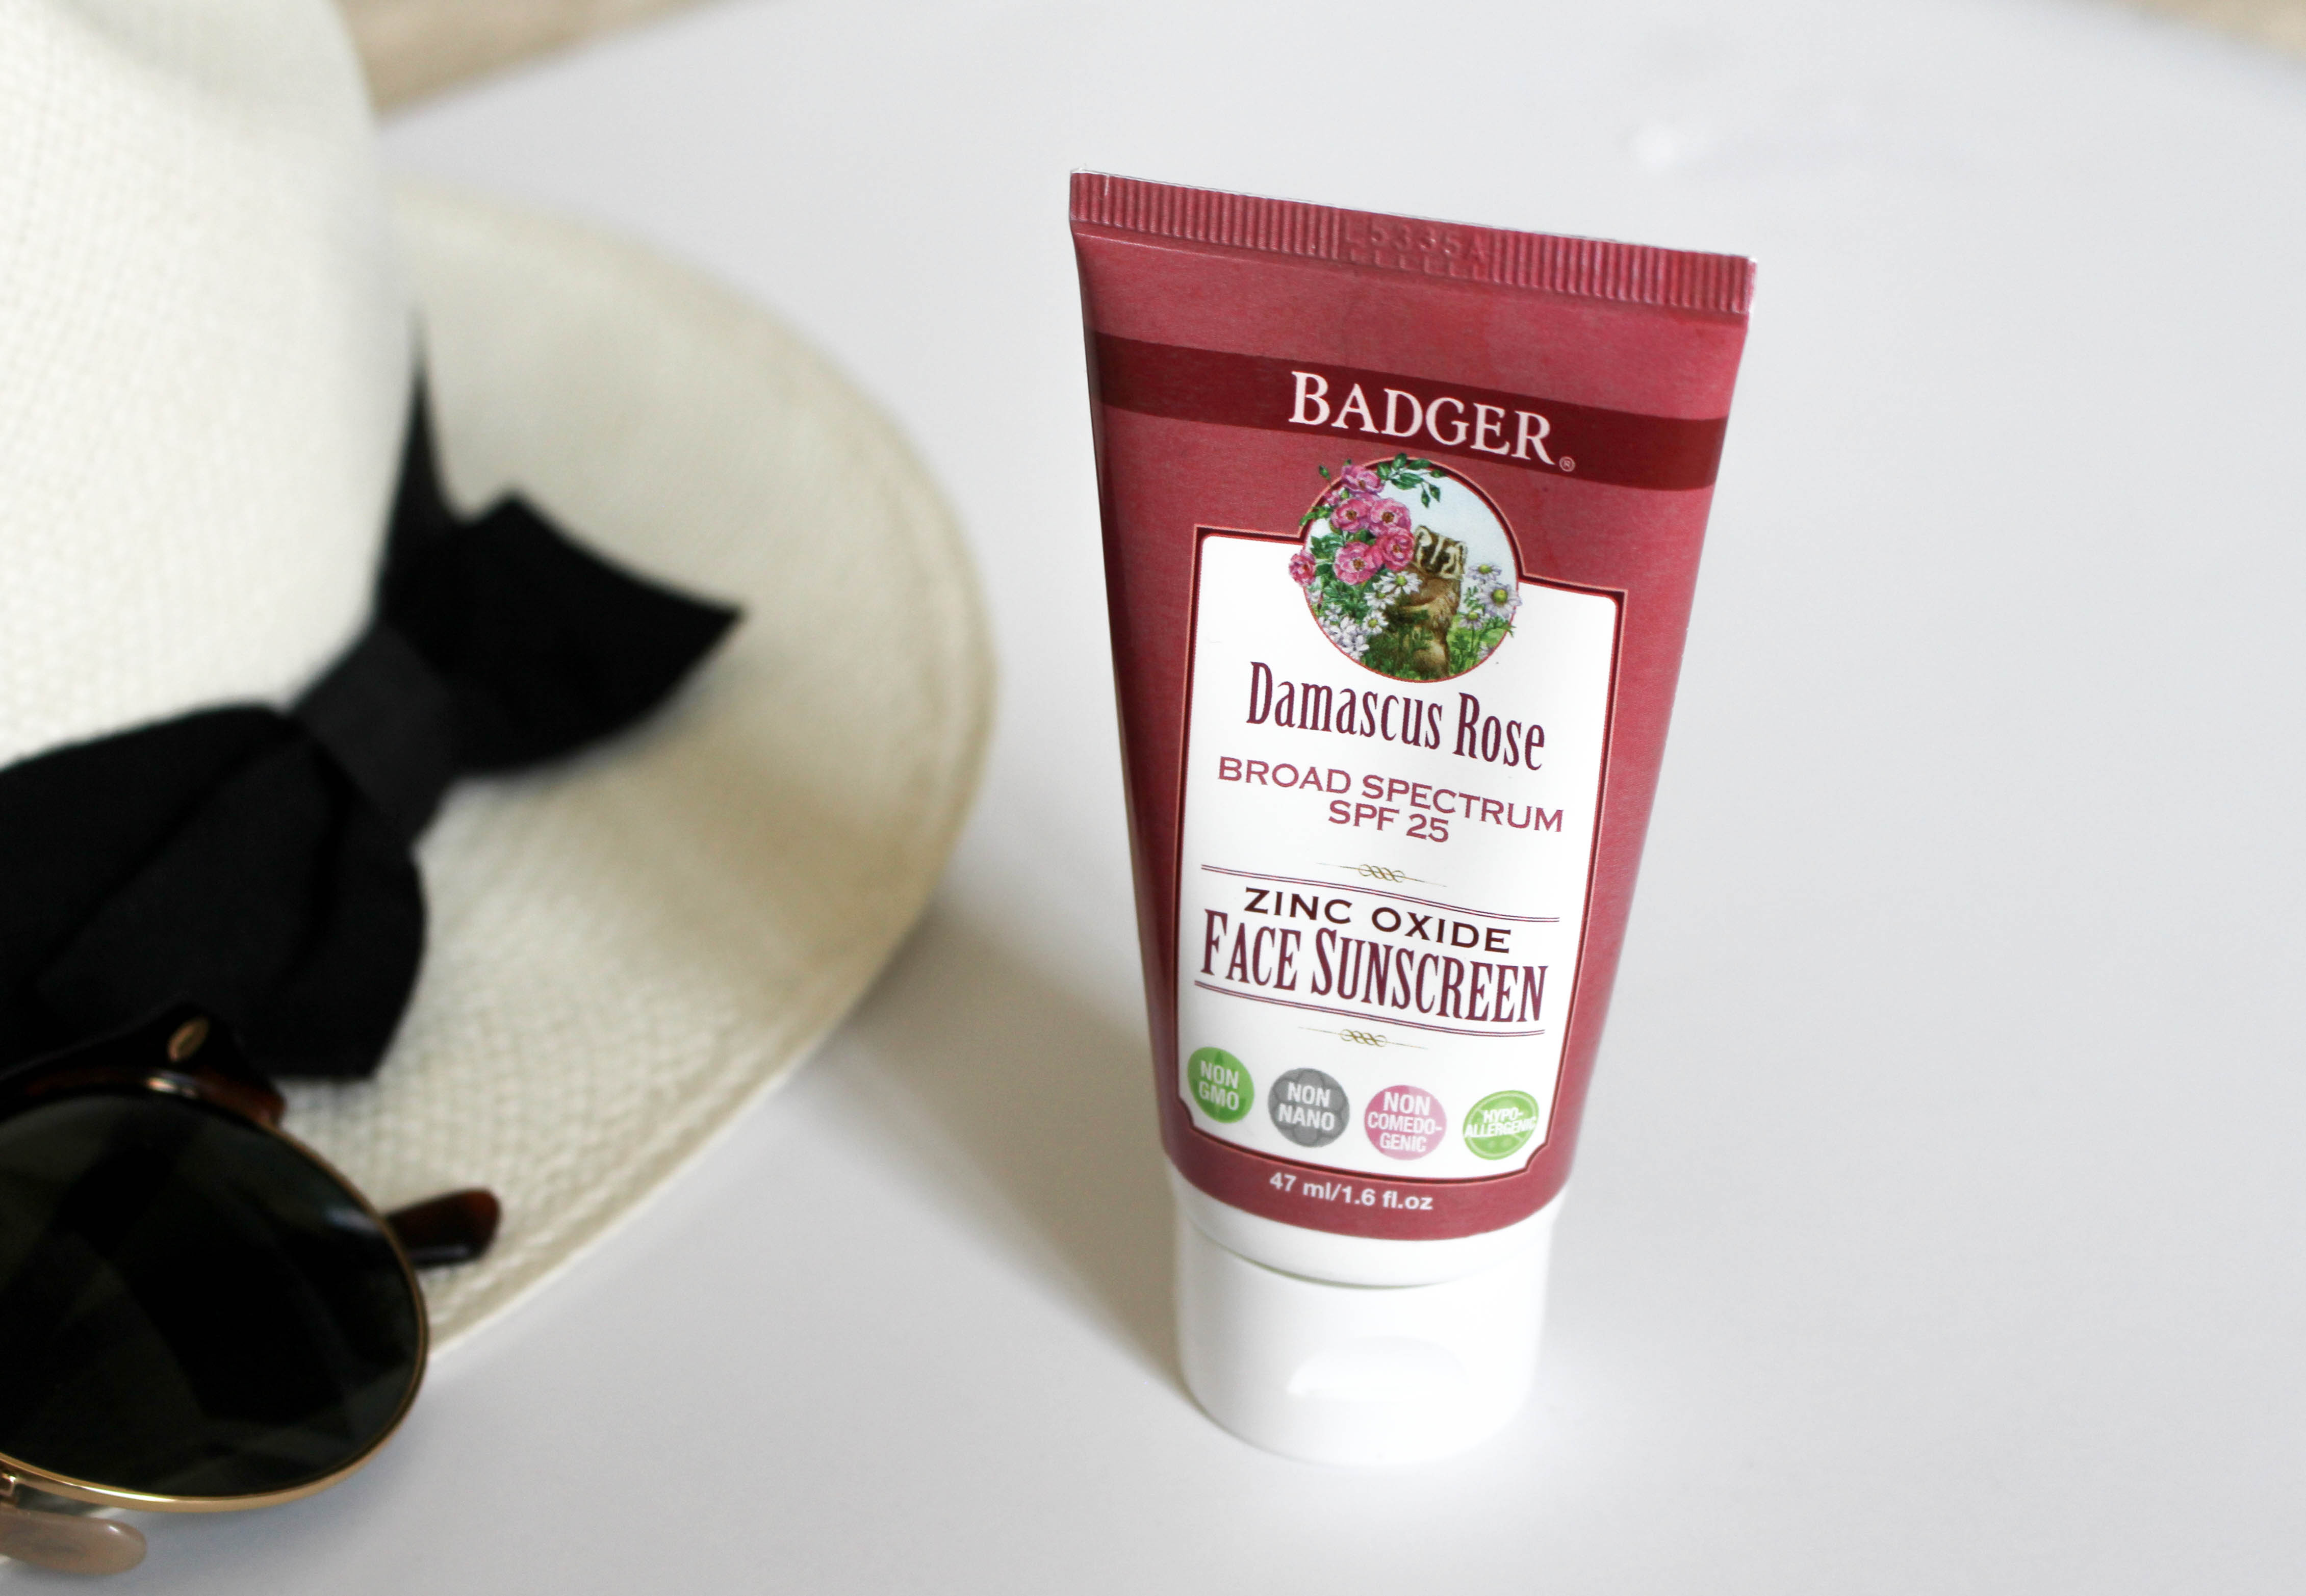 Badger Damascus Rose Face Sunscreen